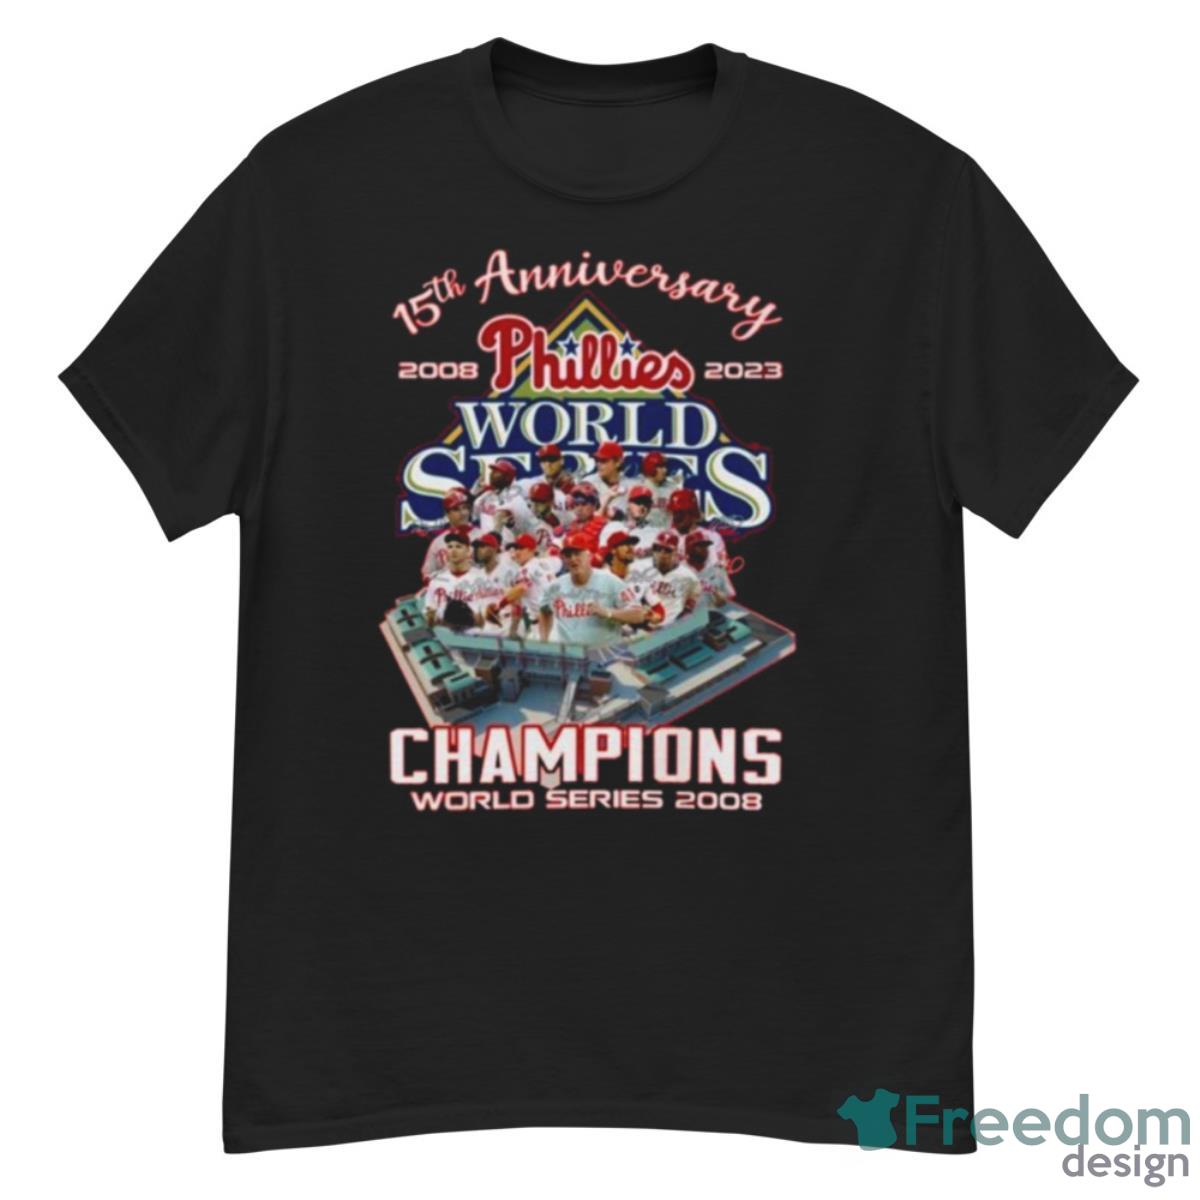 15th Anniversary 2008 – 2023 Phillies Champions World Series 2008 Shirt - G500 Men’s Classic T-Shirt